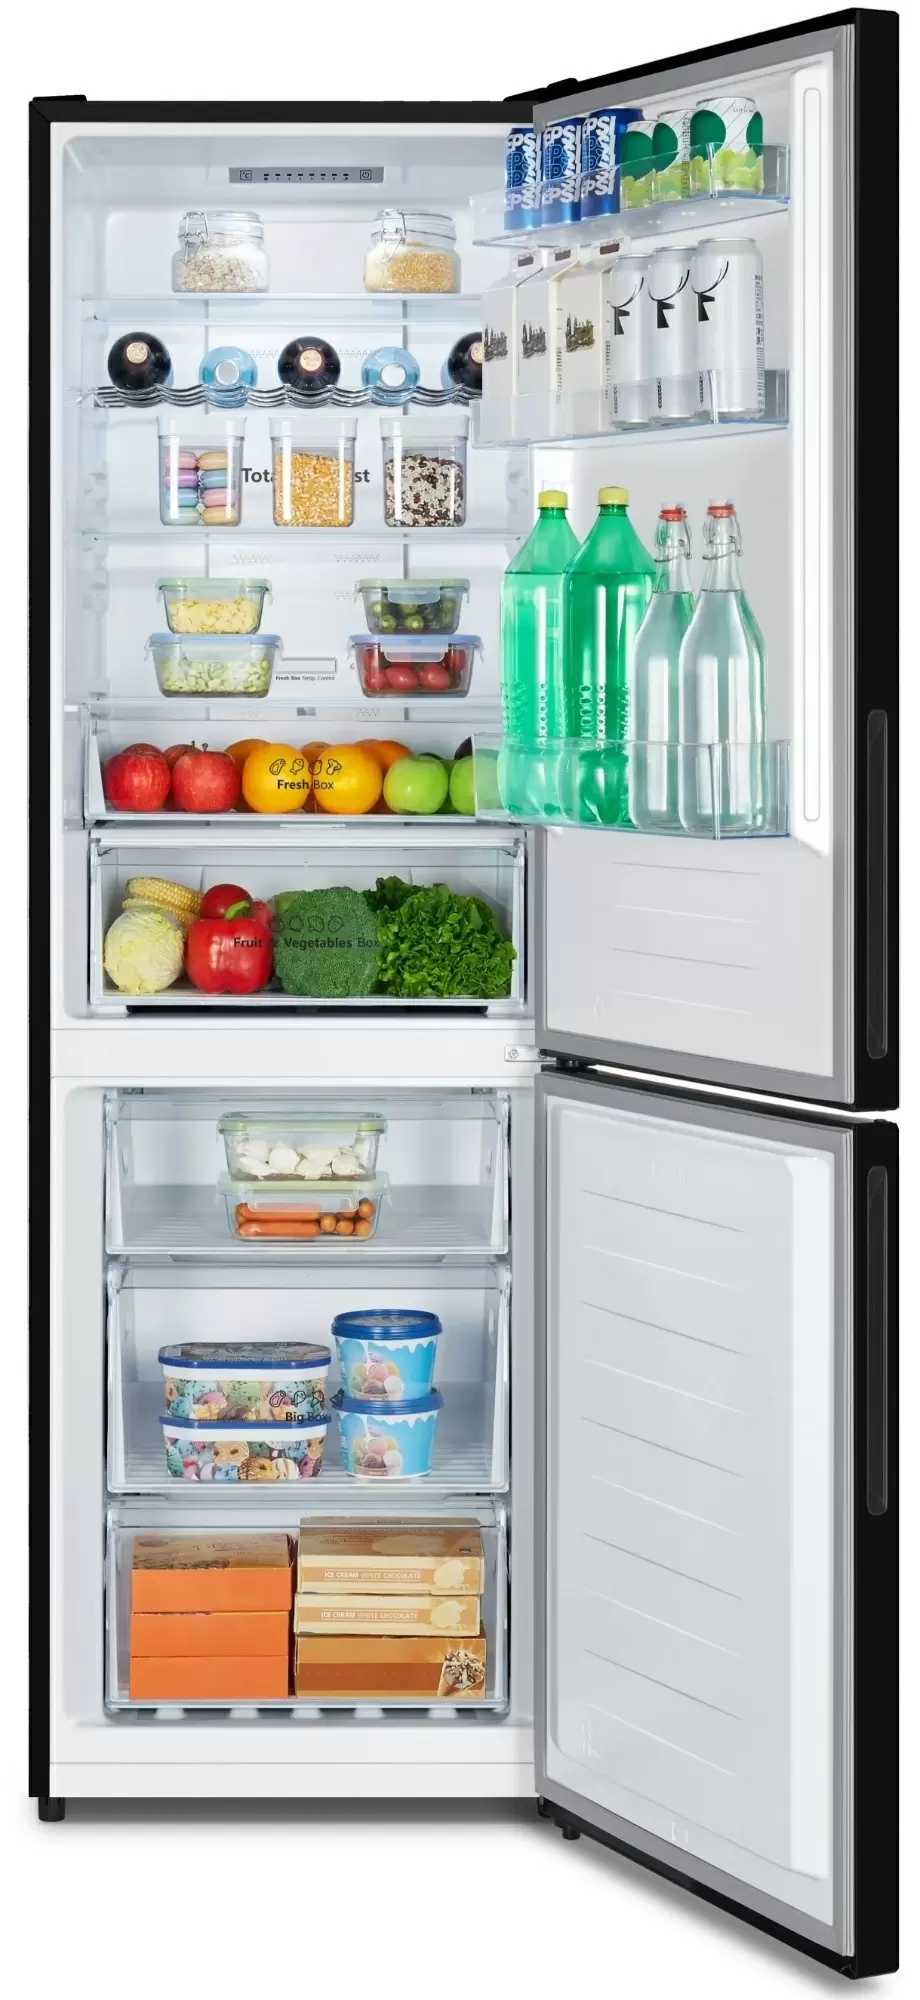 Холодильник Hisense RB390N4GBE, черный